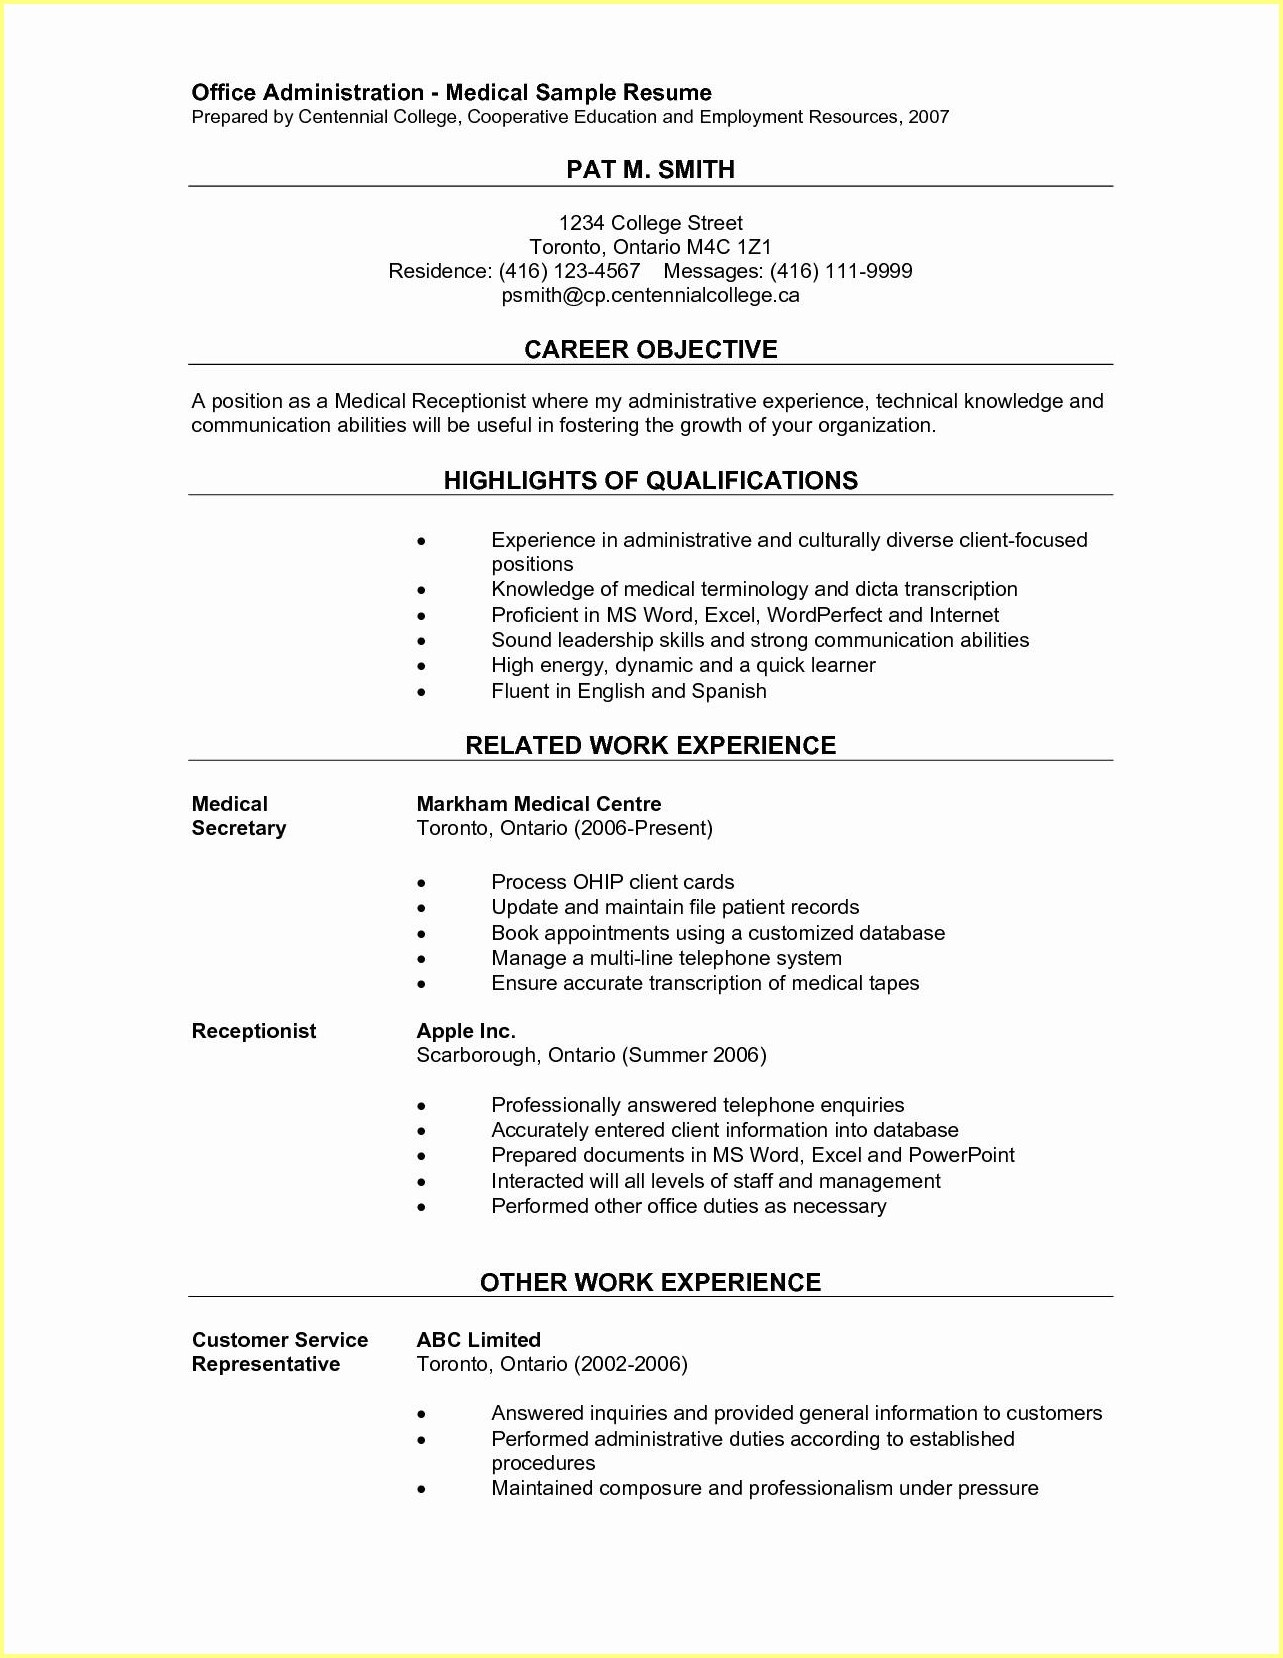 Free Printable Professional Resume Builder - Resume : Resume - Free Printable Resume Builder